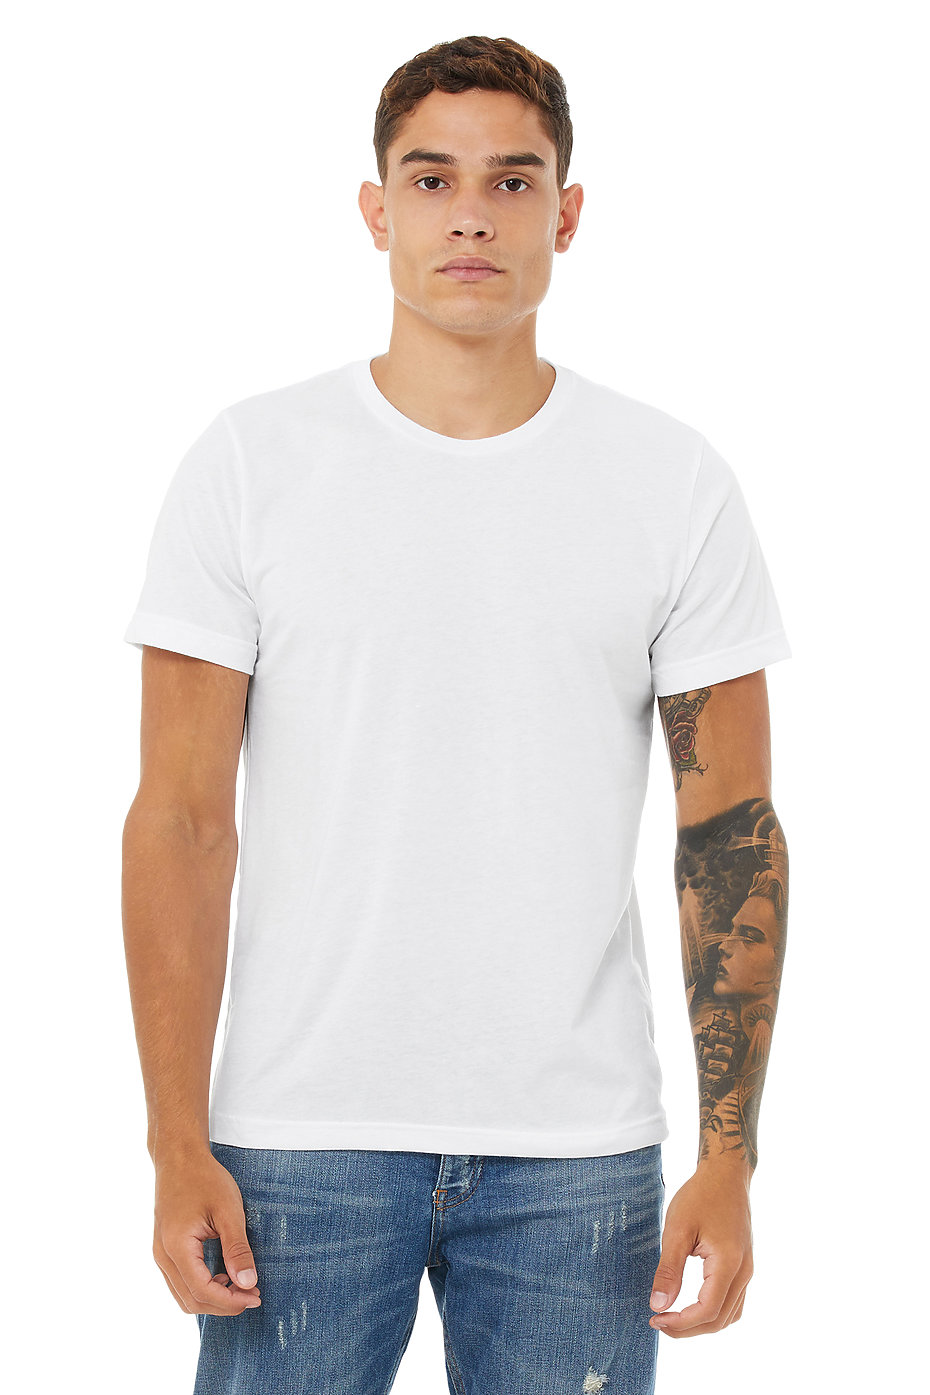 Bella + Canvas Unisex 52/48 Blend T-Shirt